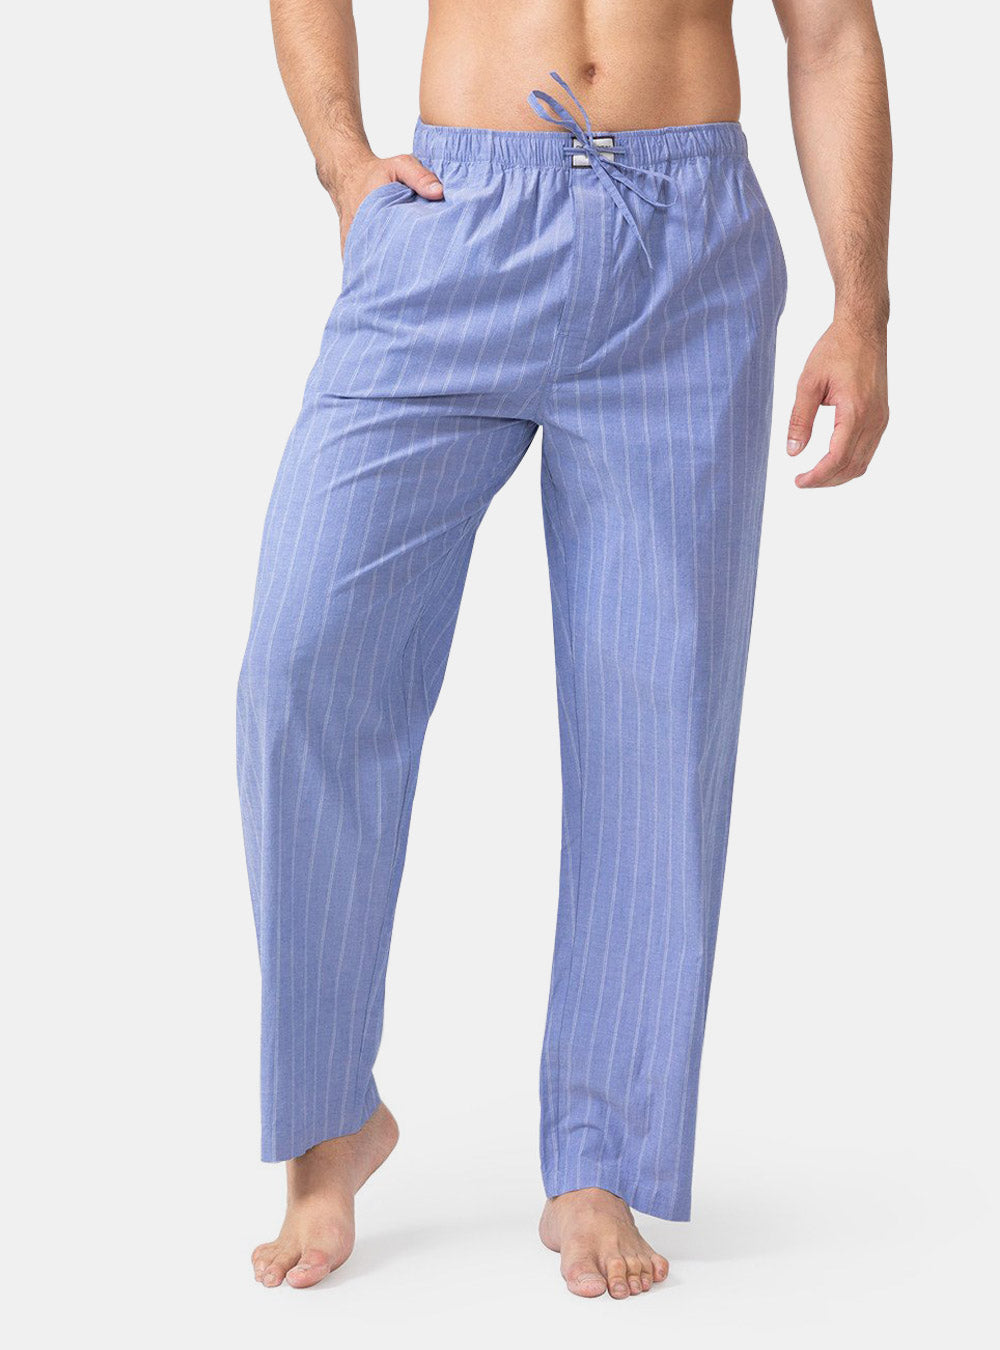 Pajama Pants with Fly Cotton Lounge Wear David Archy Tall Pajama Pants Sleep  Bottom